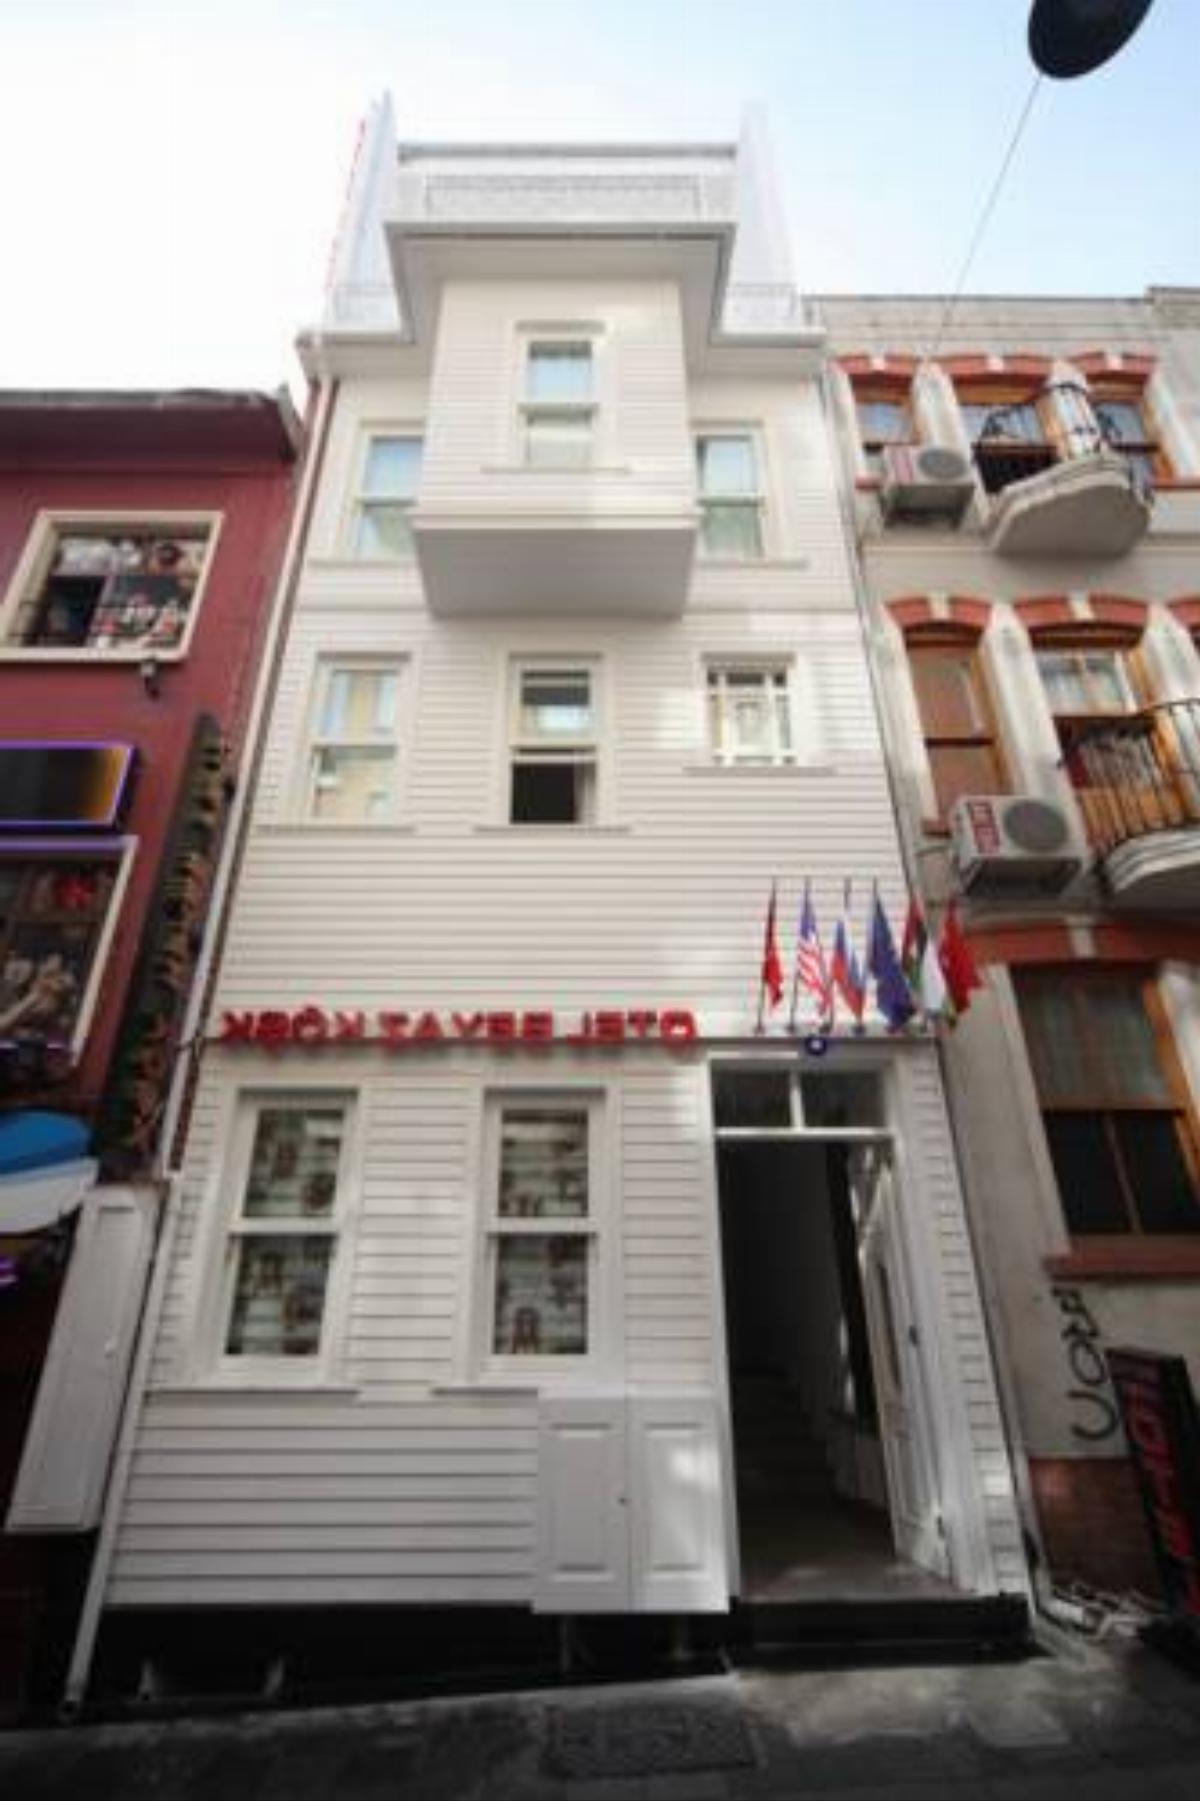 Beyazköşk Otel Hotel İstanbul Turkey